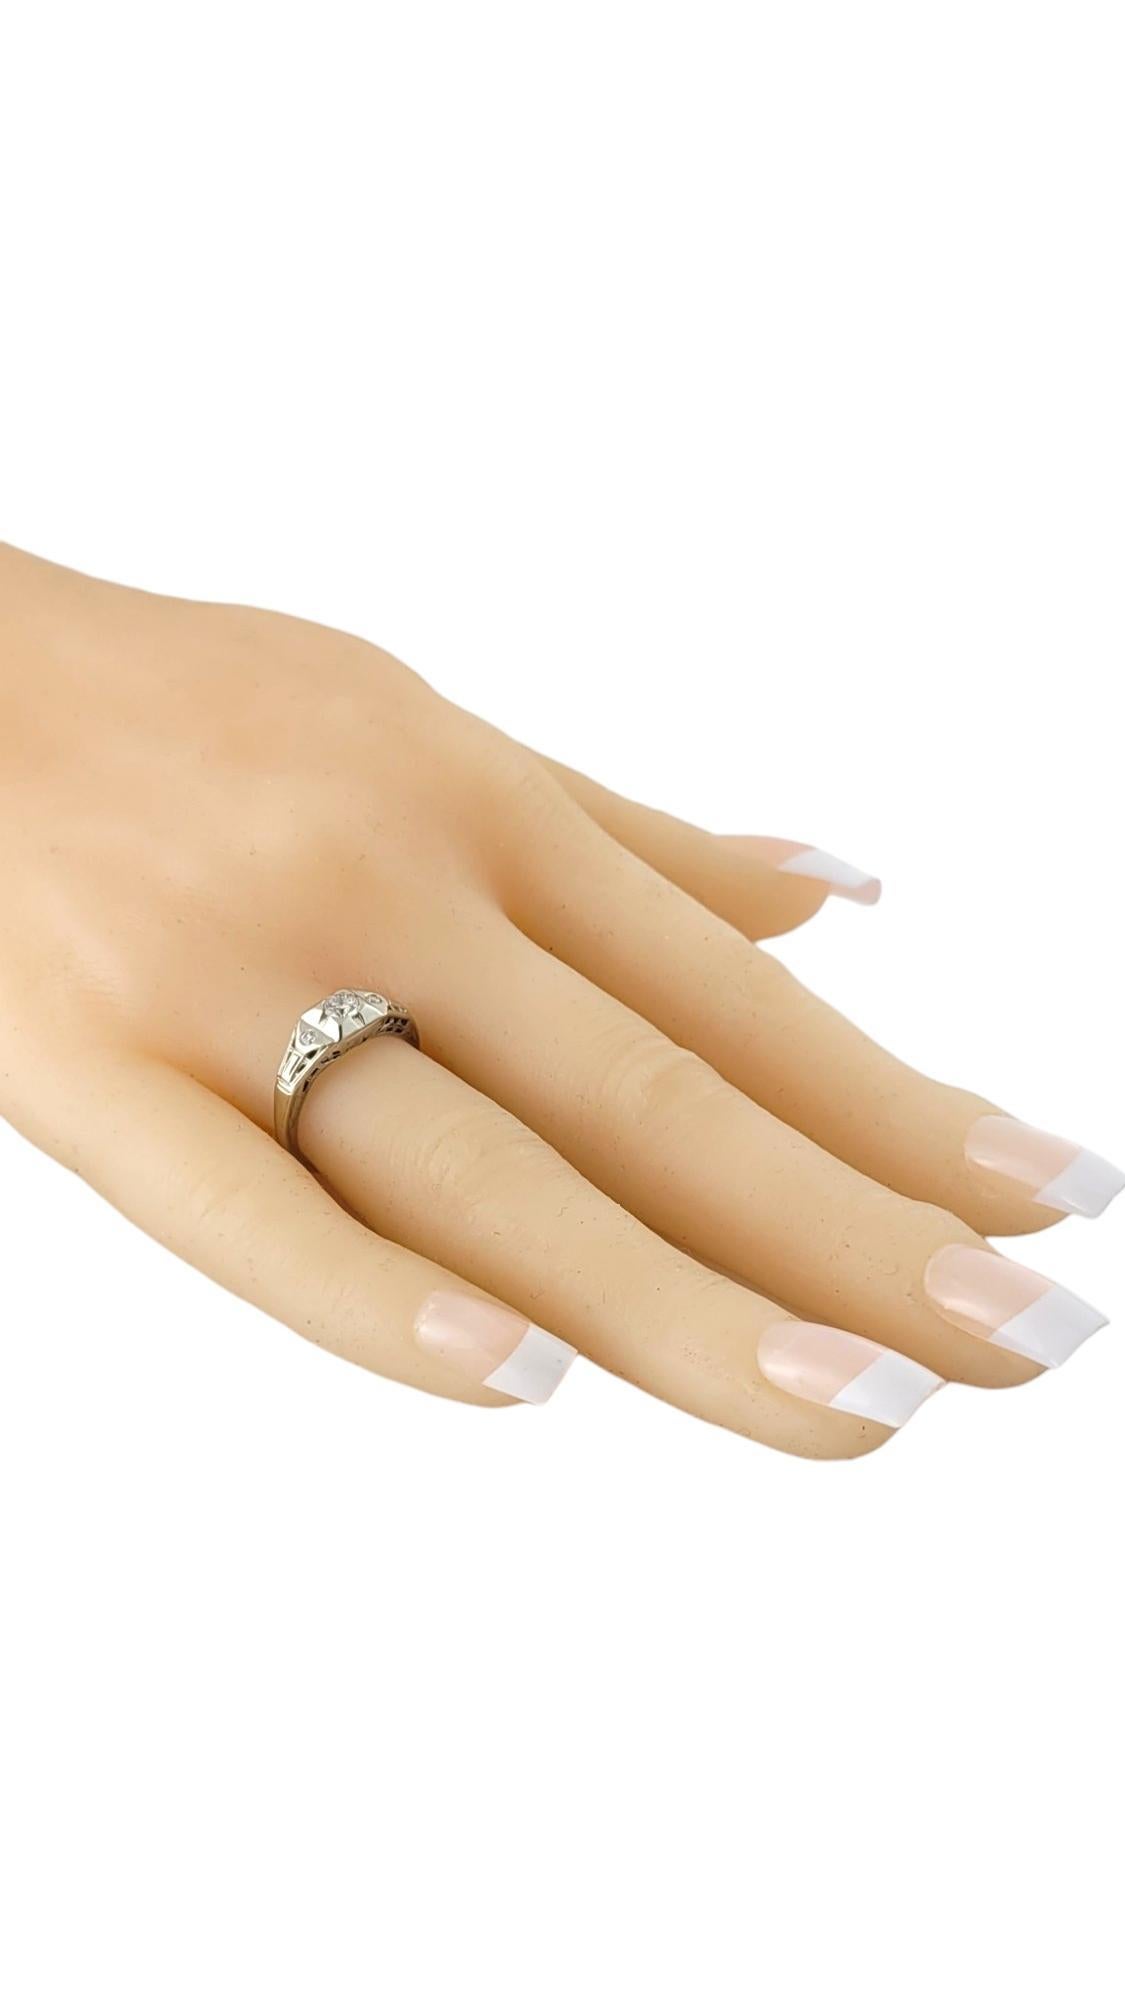 Vintage 14K White Gold Diamond Ring Size 4.75 #16930 For Sale 2